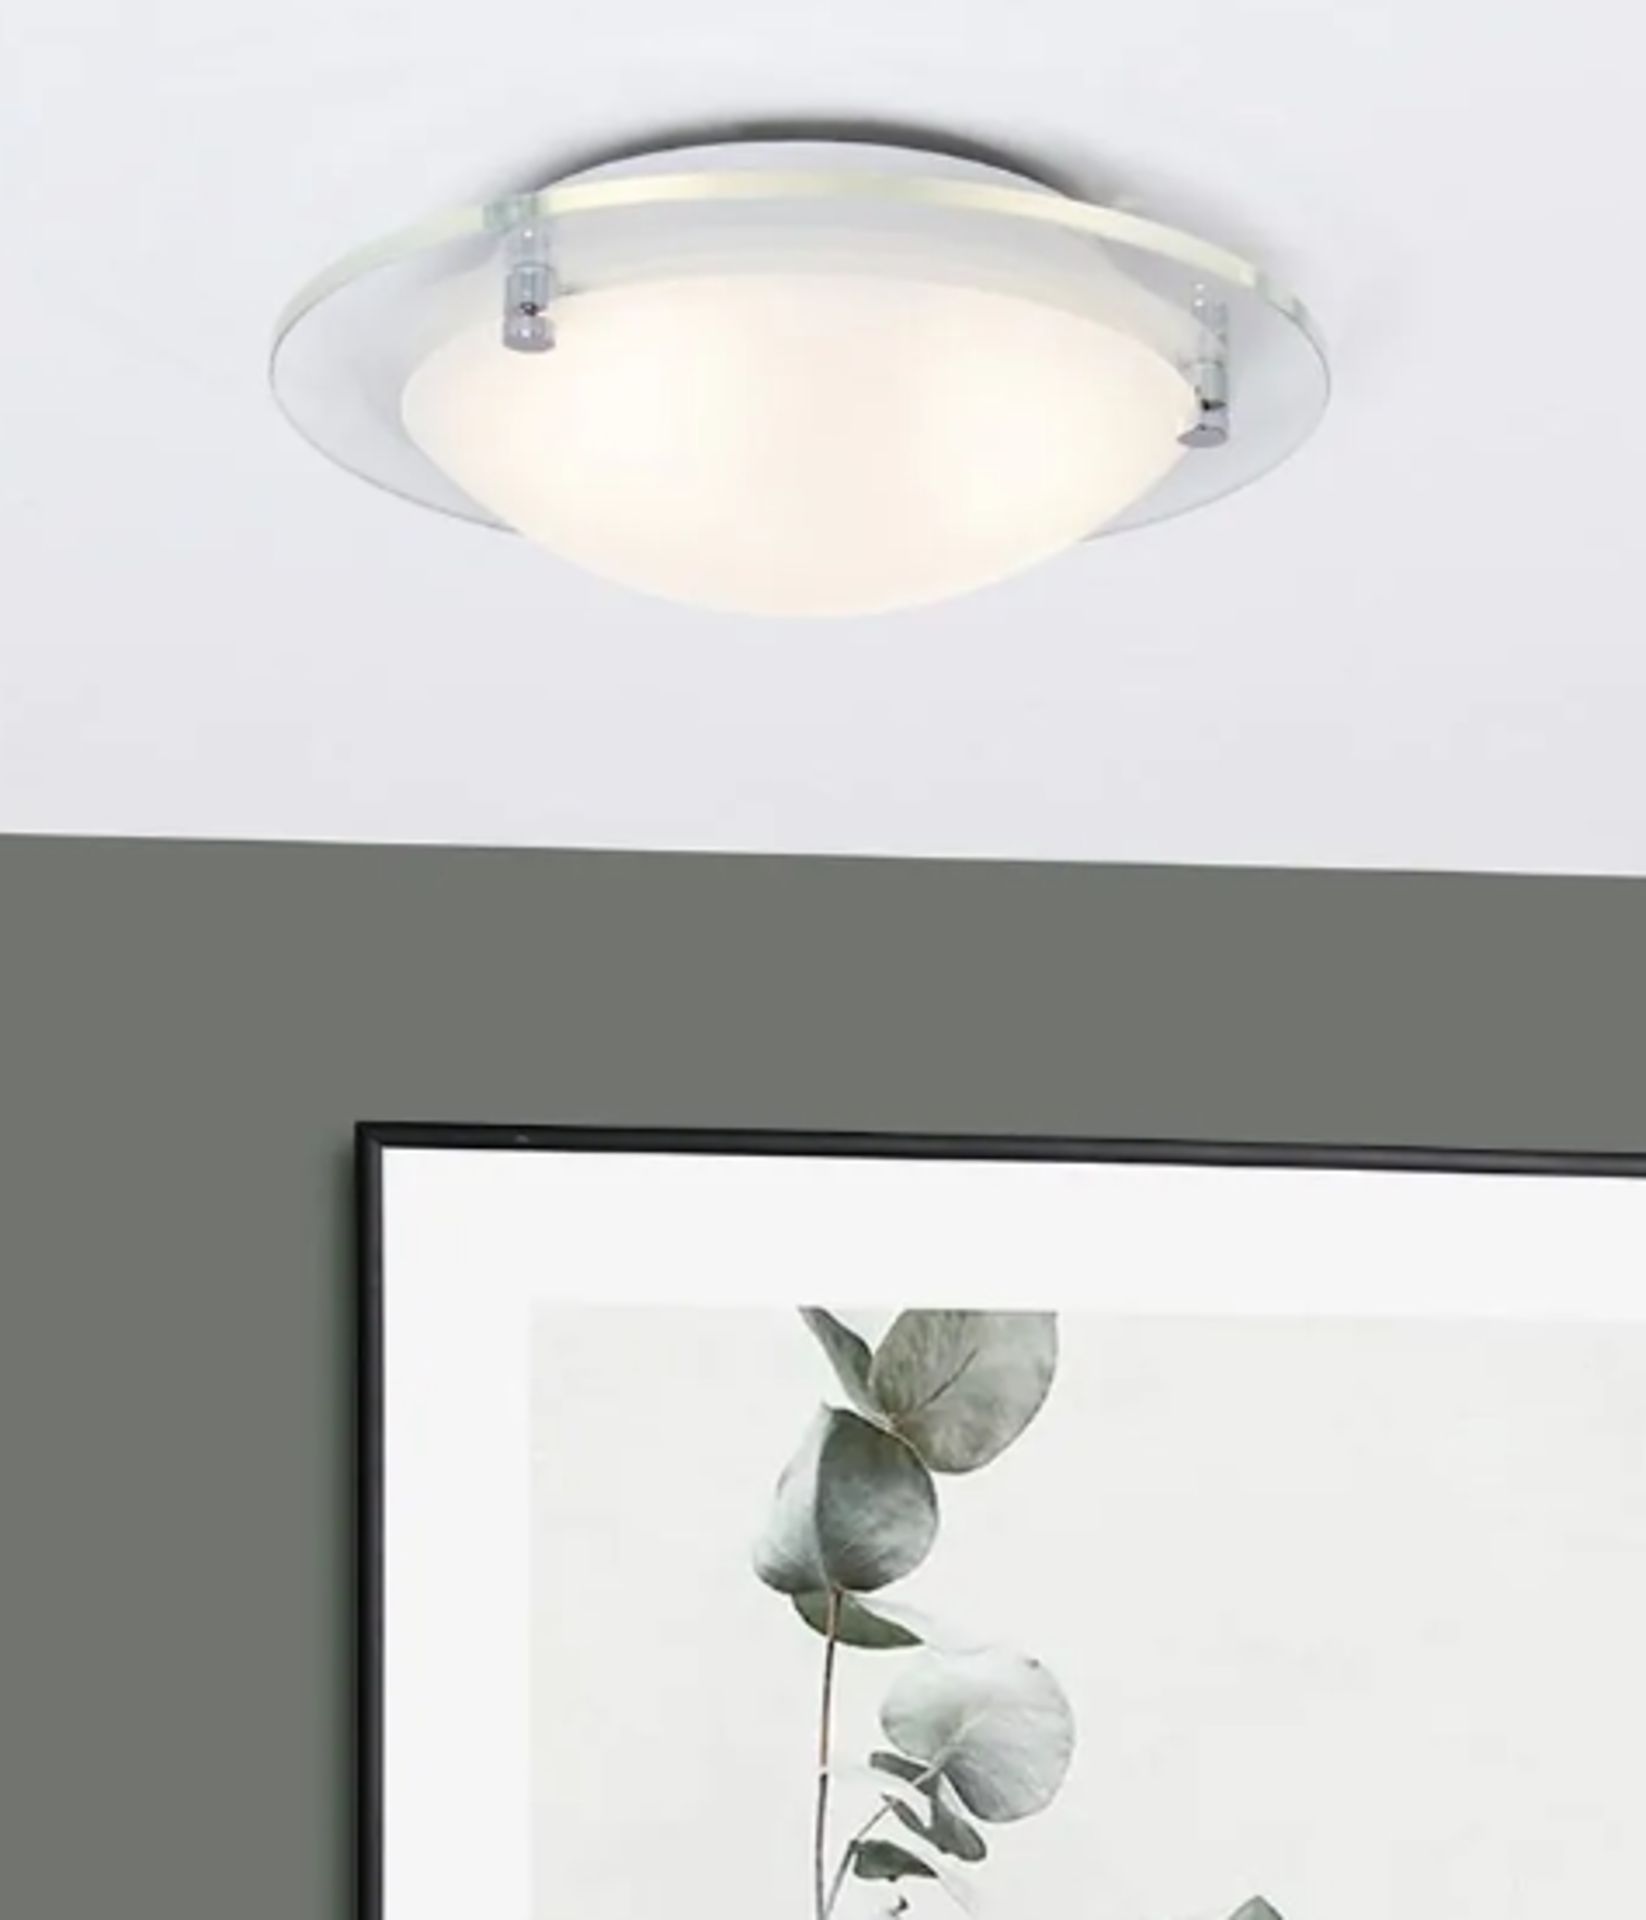 1 x Spa Bathroom Lighting - Draco Round Flush Ceiling Light - Unused Boxed Stock - CL011 - Location: - Image 5 of 6